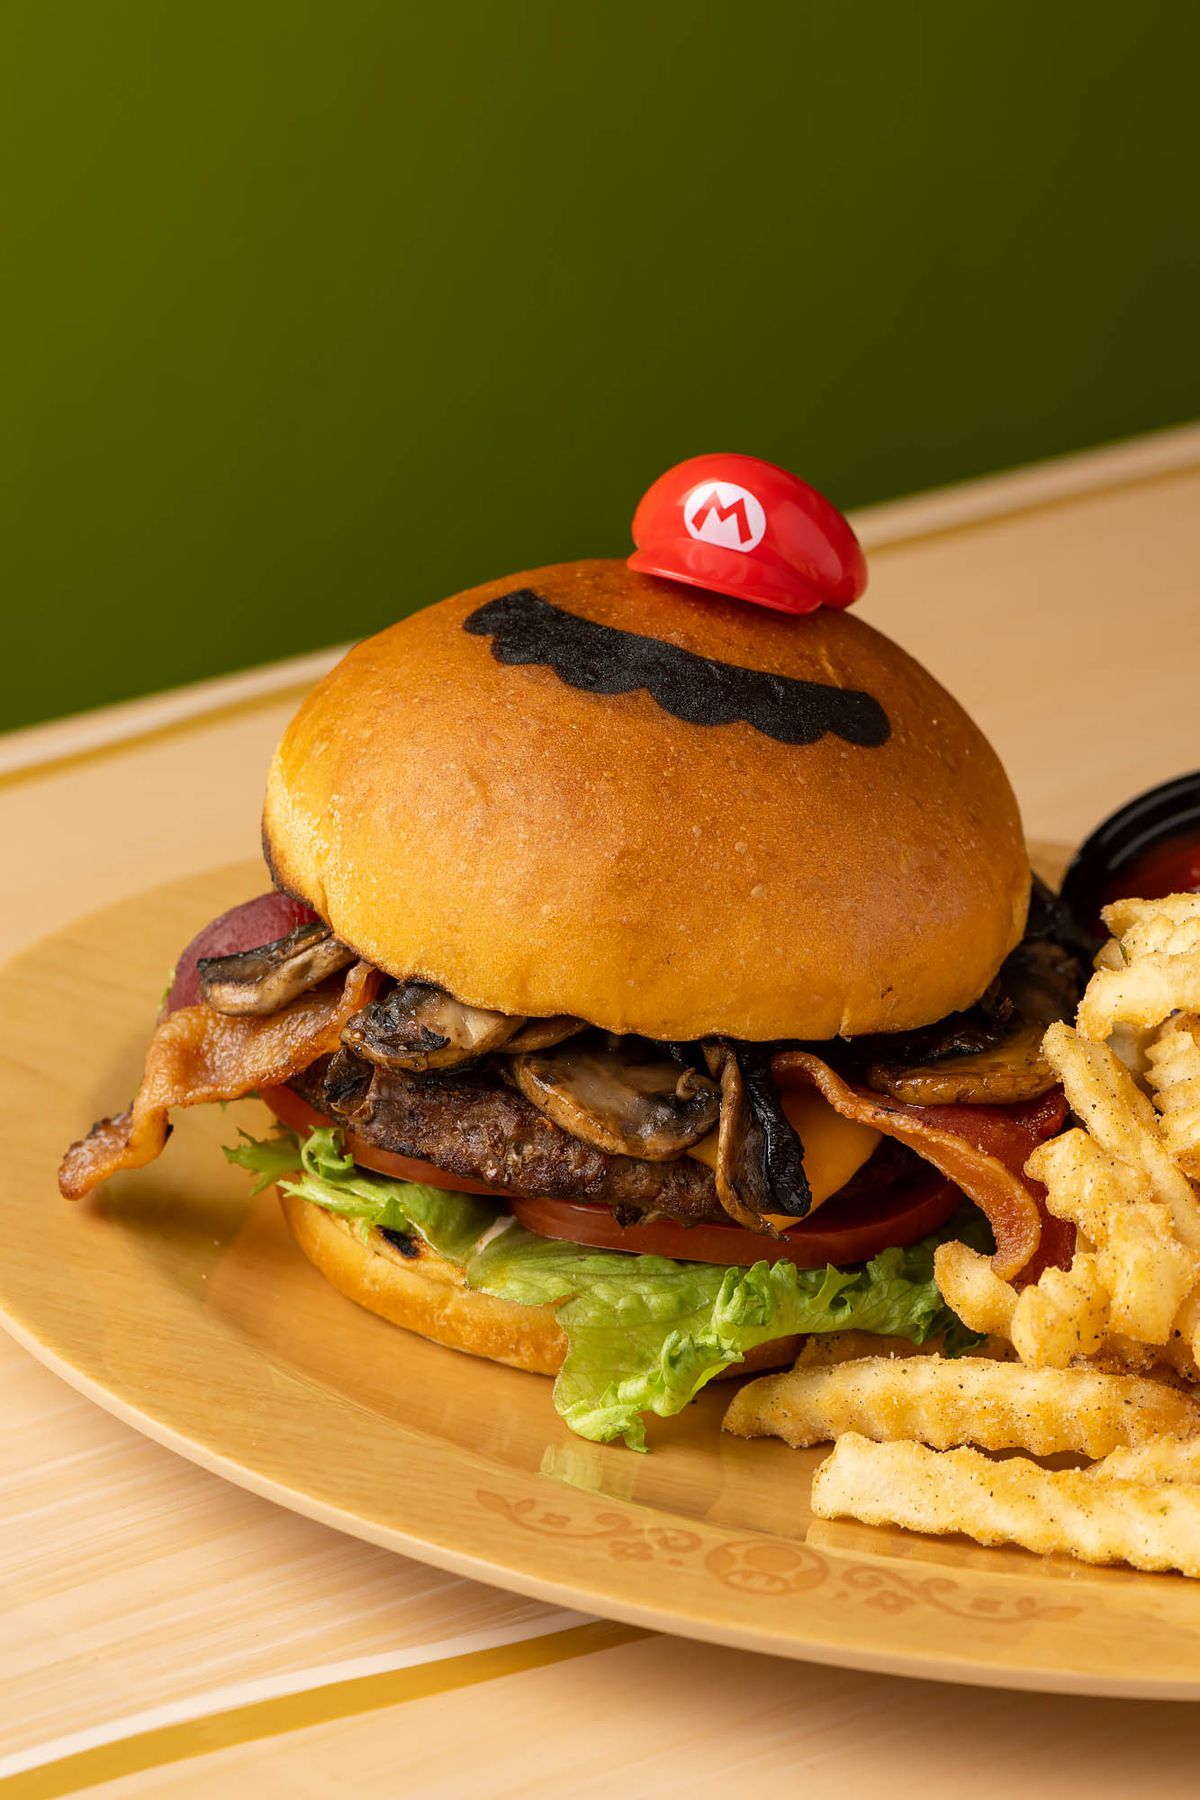 Mario Burger with bacon, mushroom, and cheese.